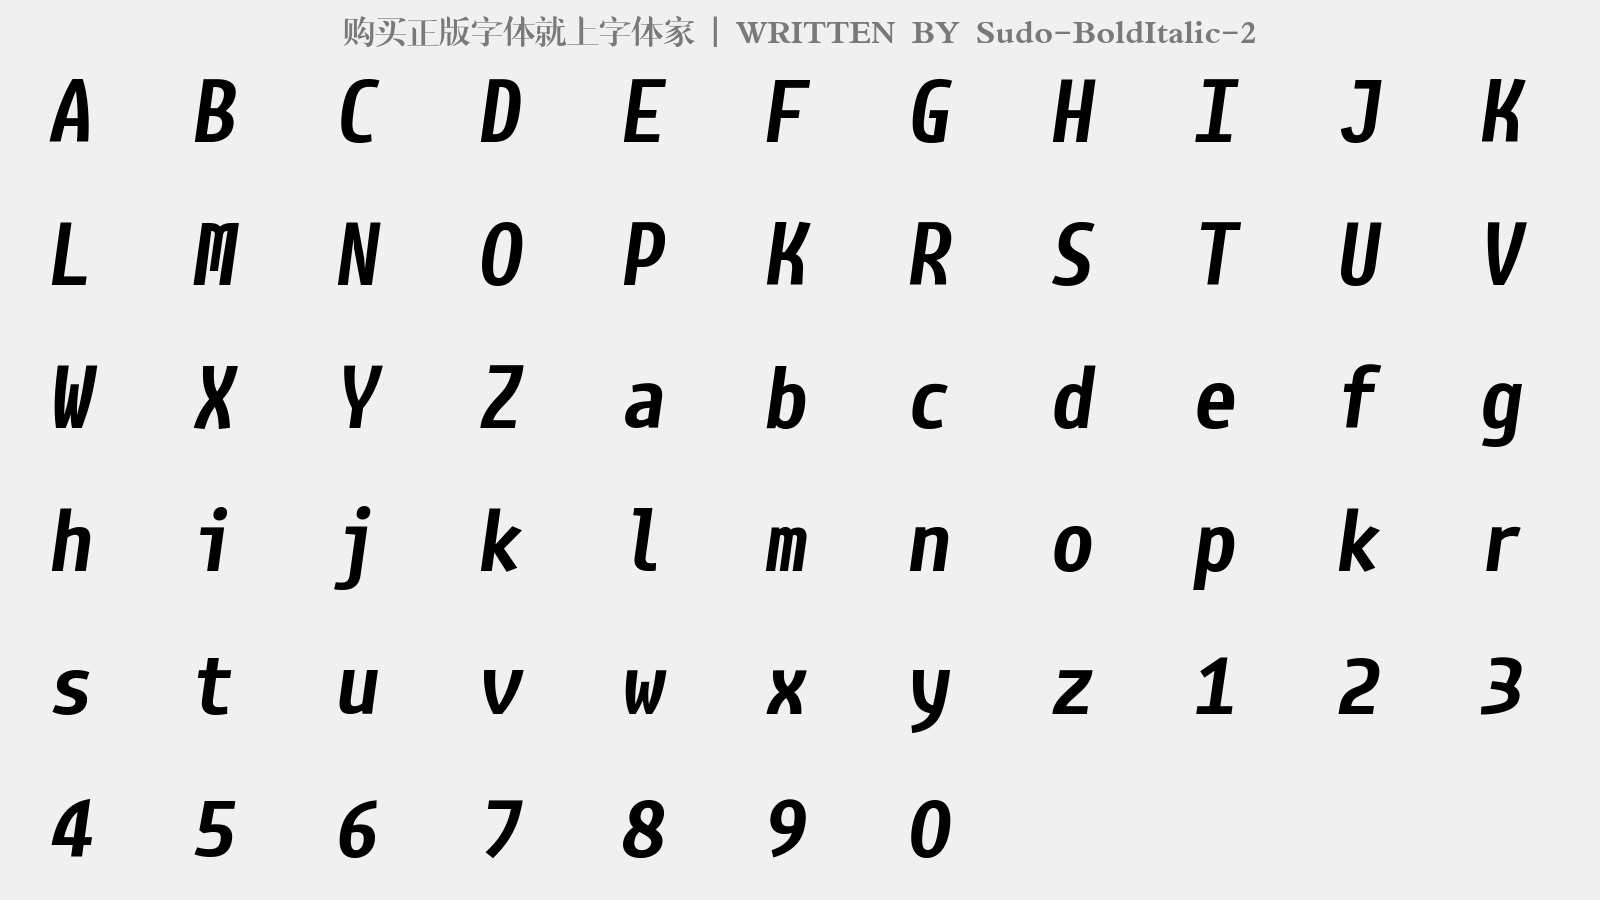 Sudo-BoldItalic-2 - 大写字母/小写字母/数字